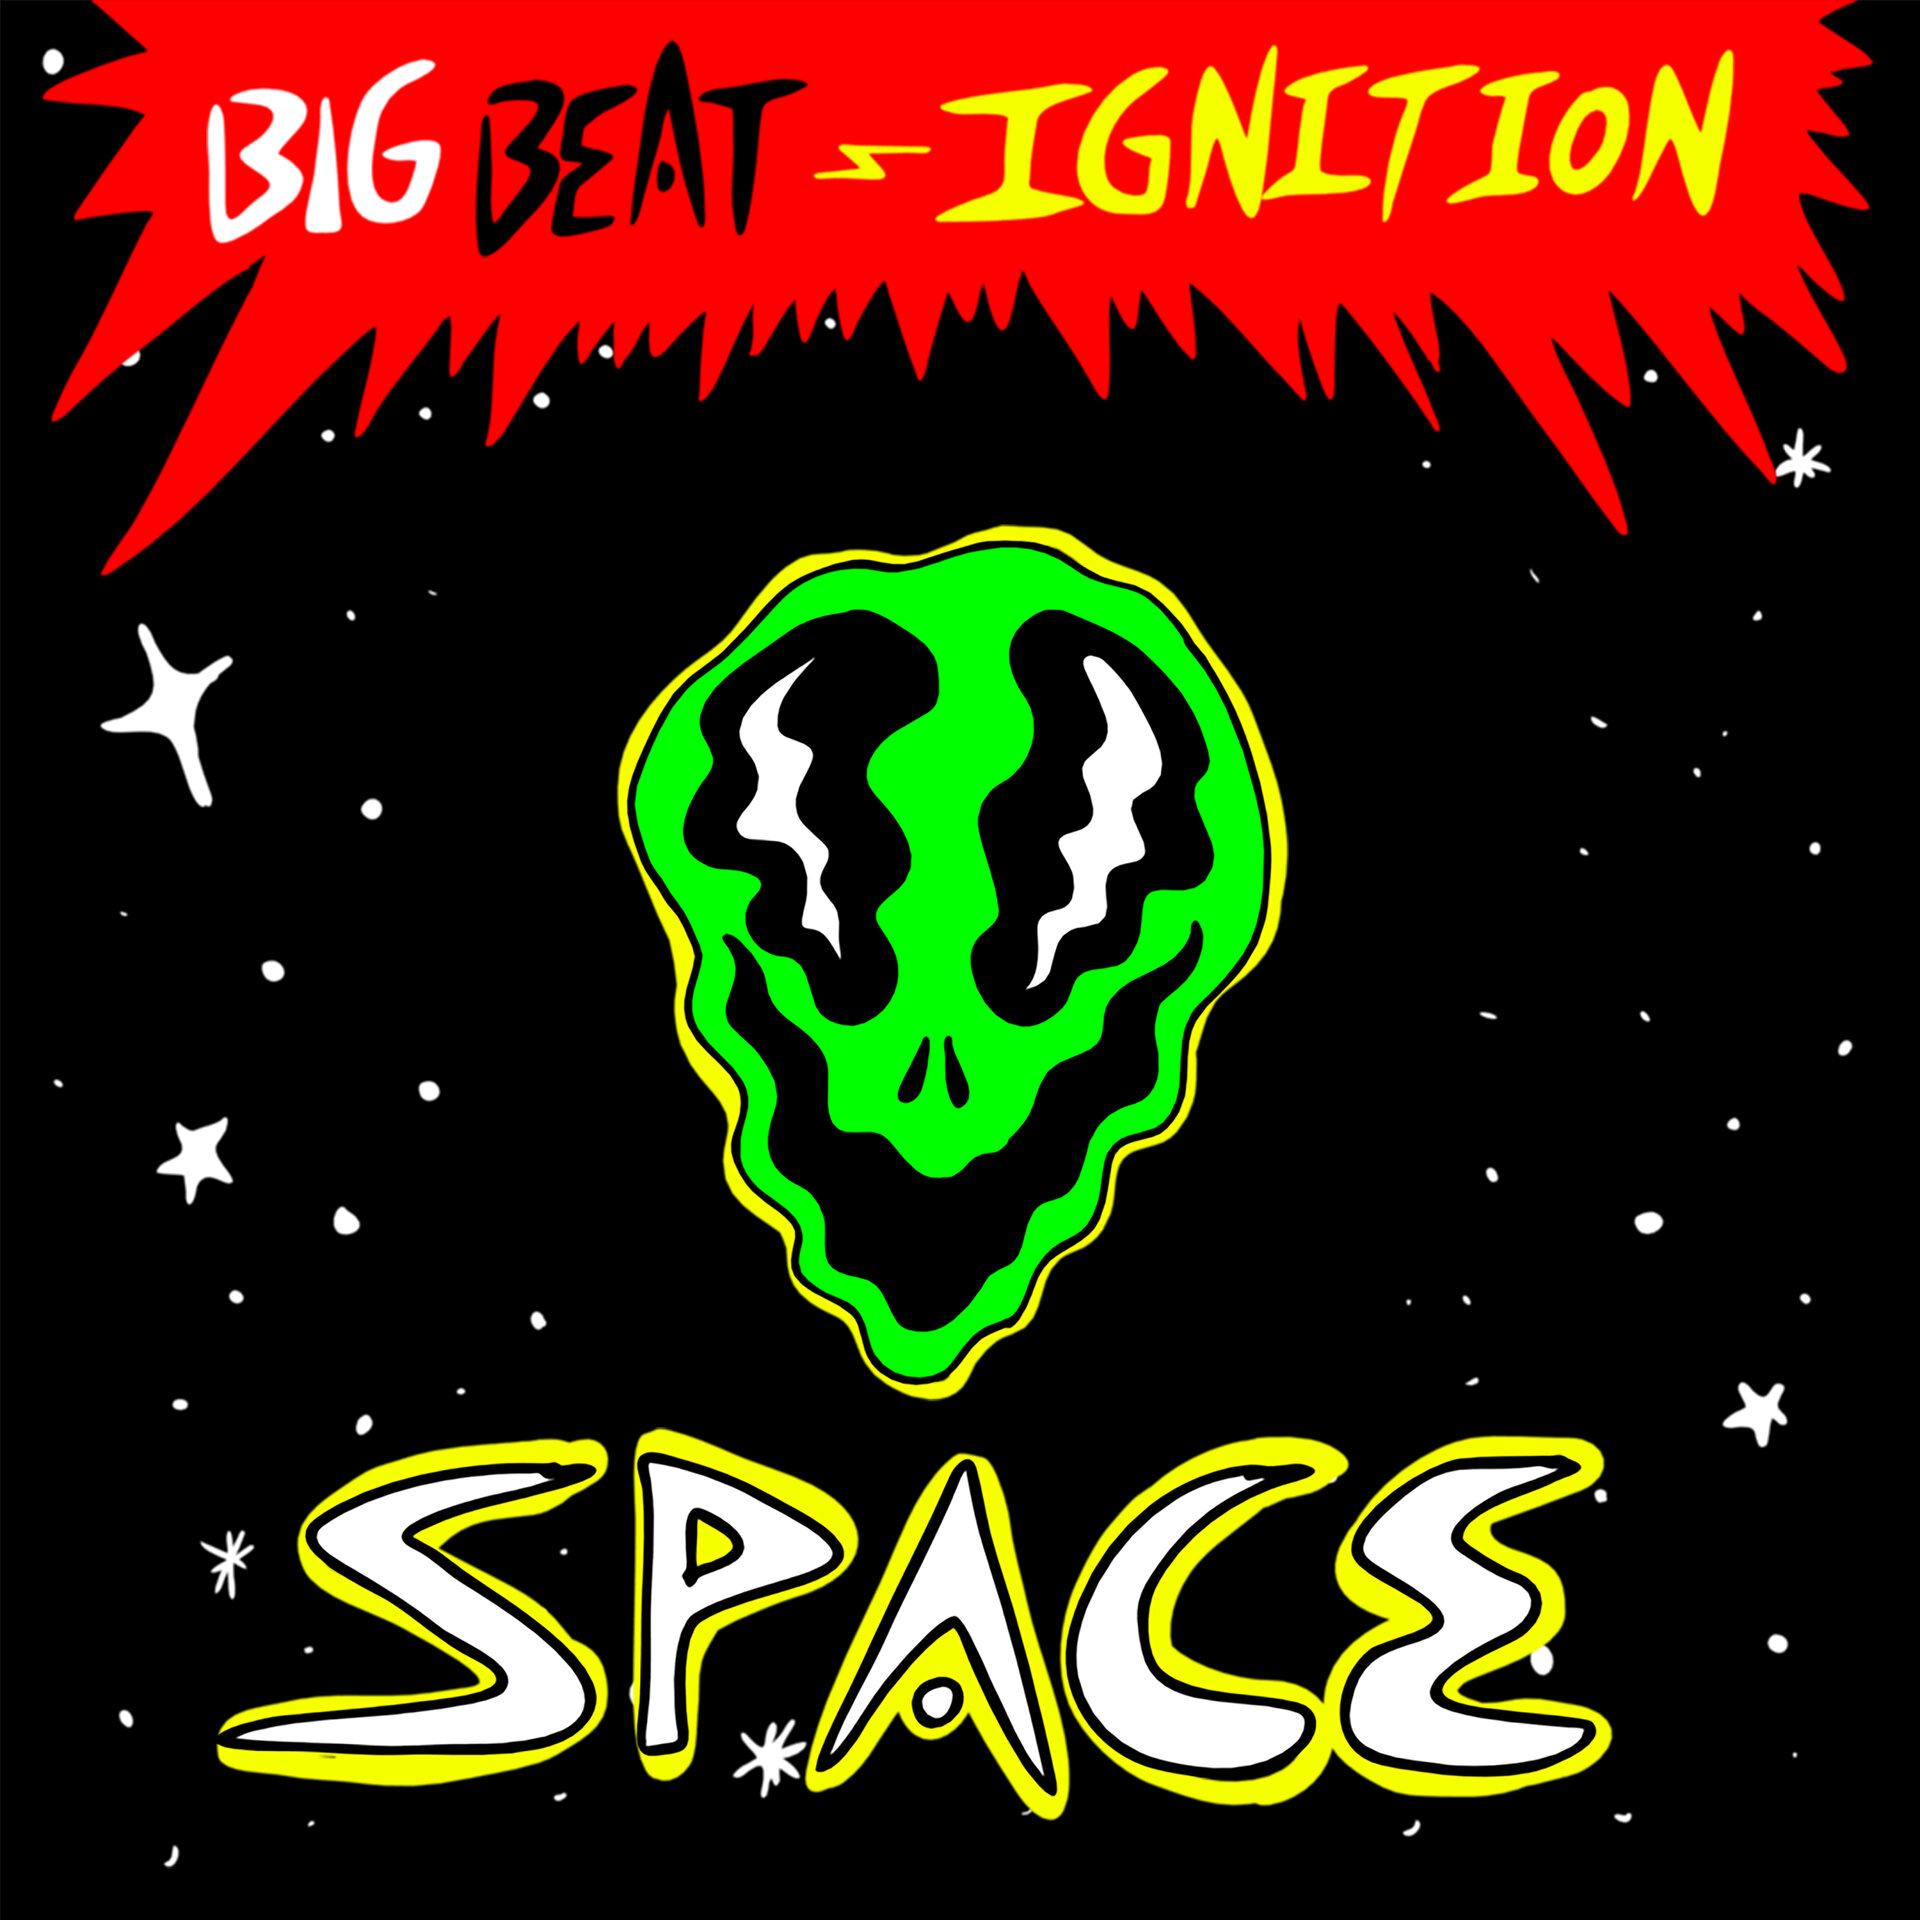 Big Beat - Ignition